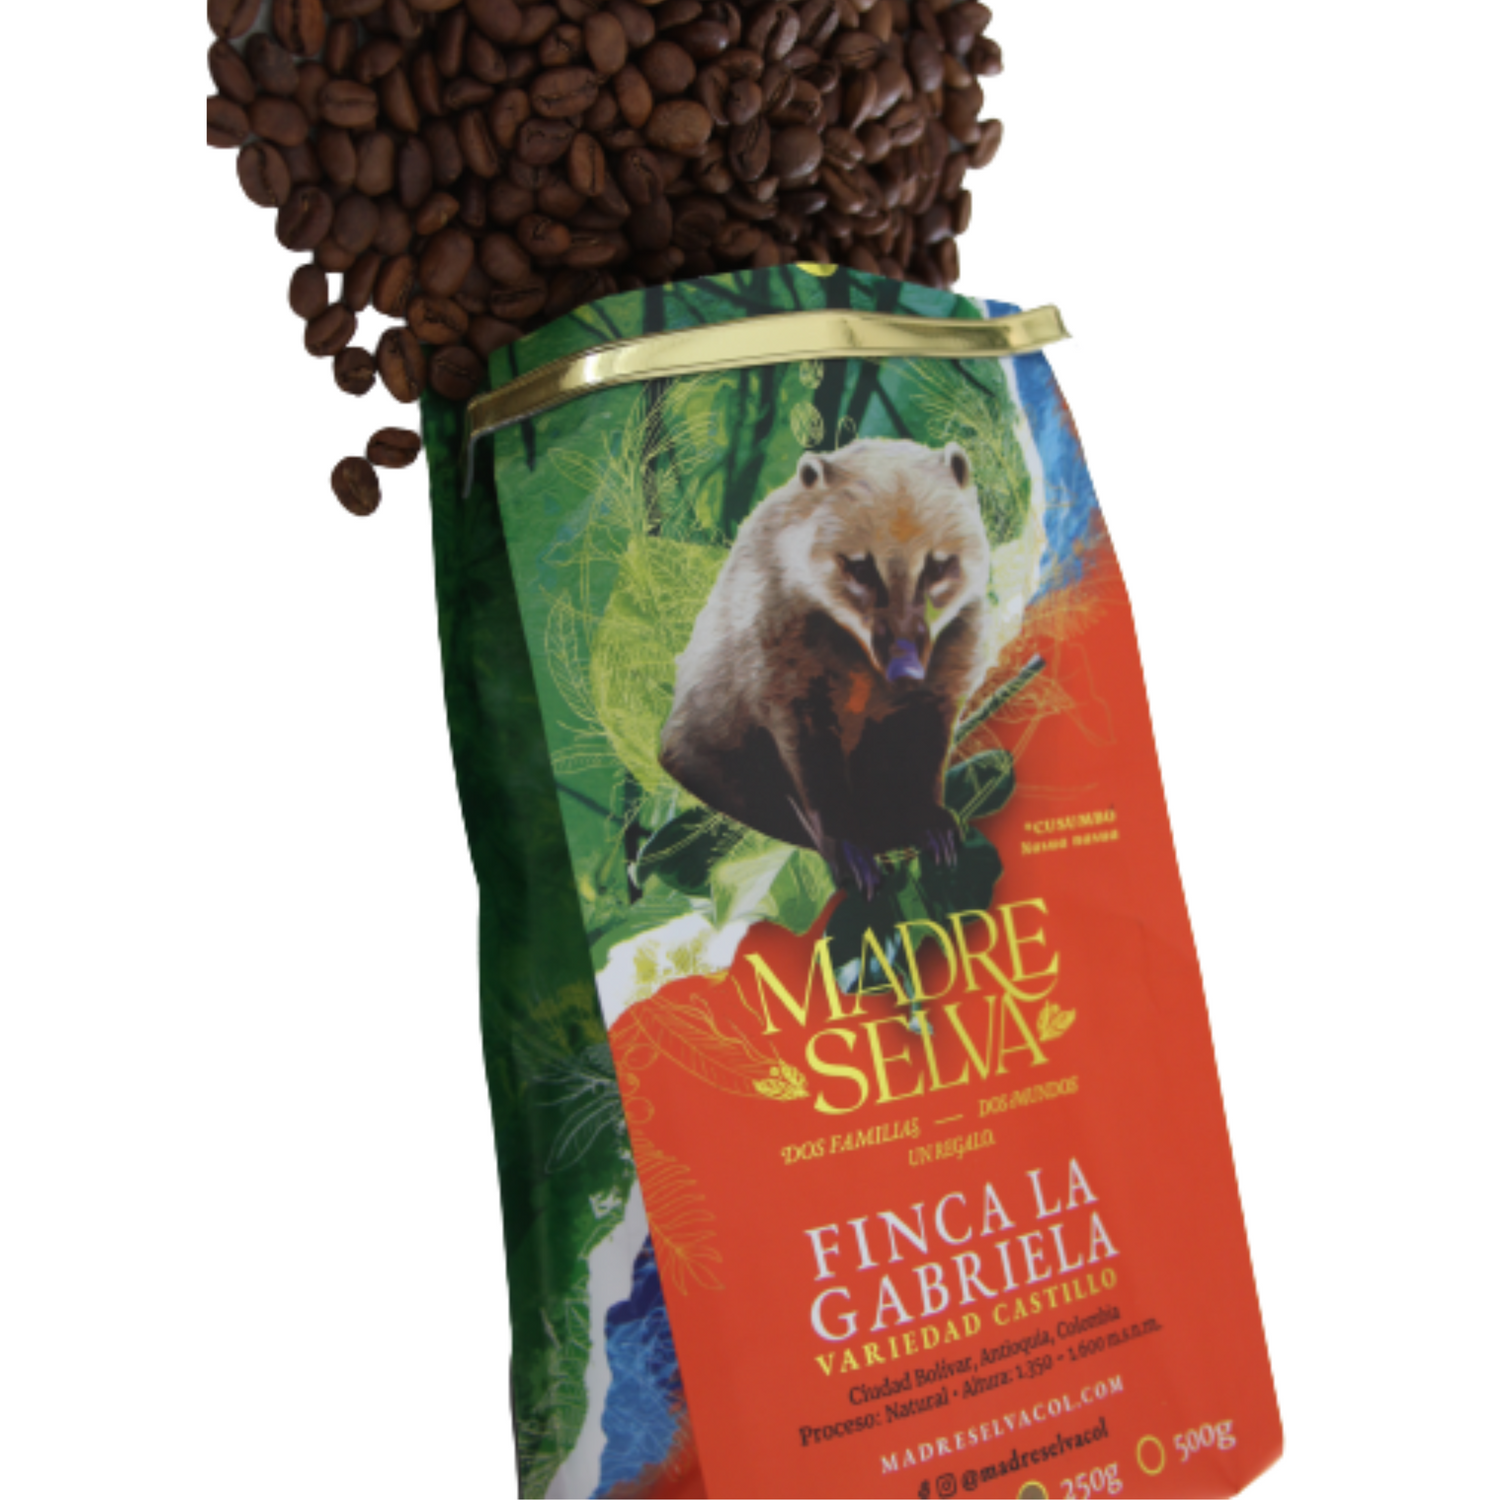 Coffee Bean and Birds. Madre Selva - Finca La Gabriela Specialty Coffee